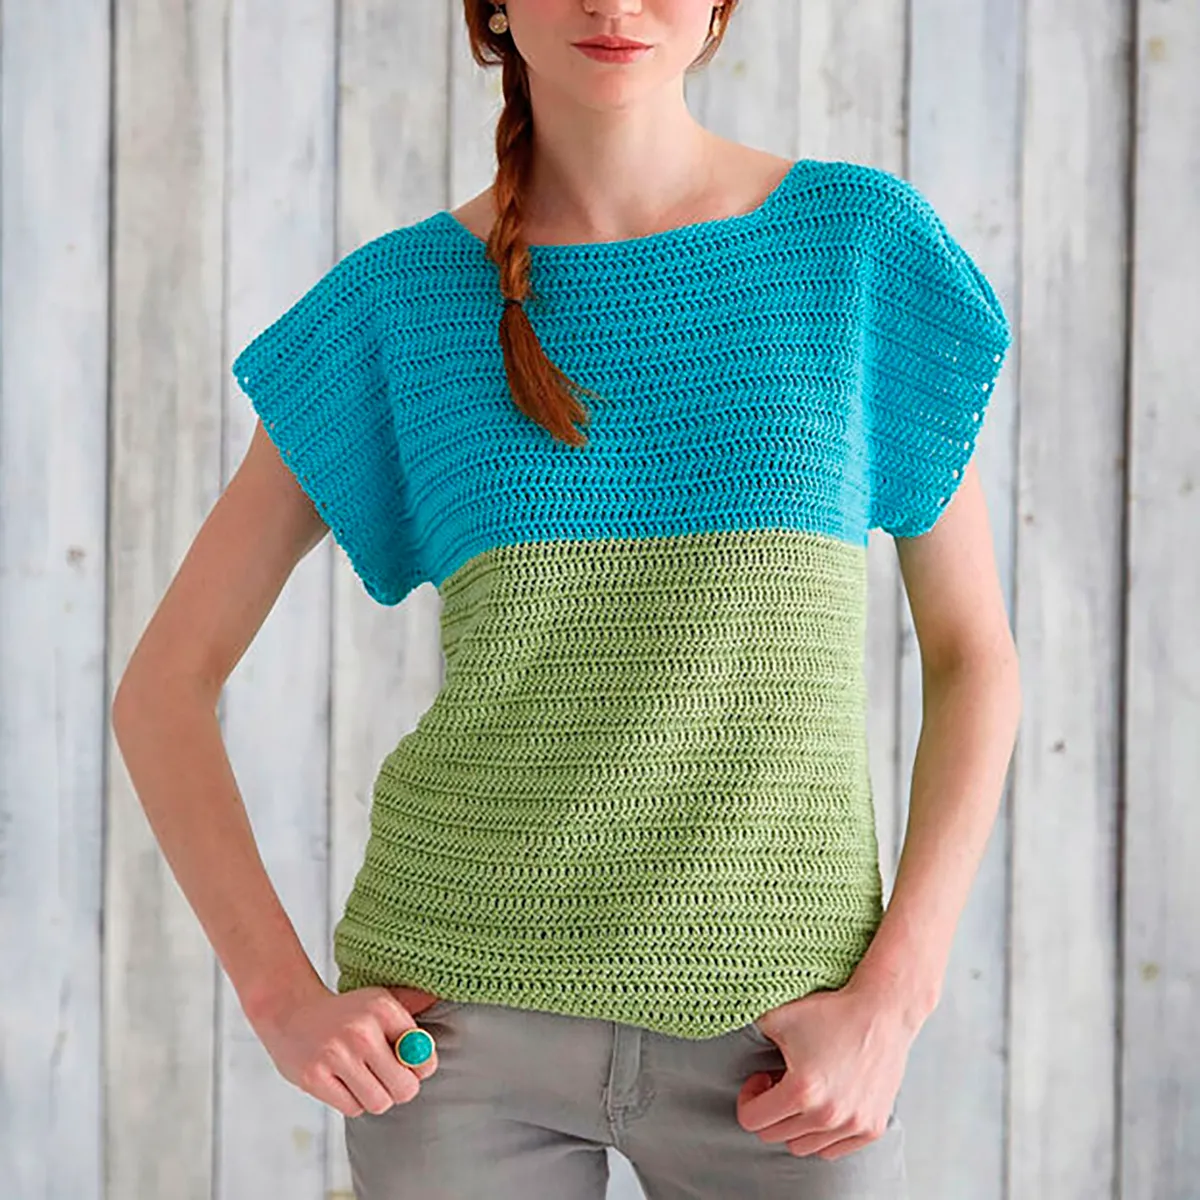 colourblock top beginner crochet pattern